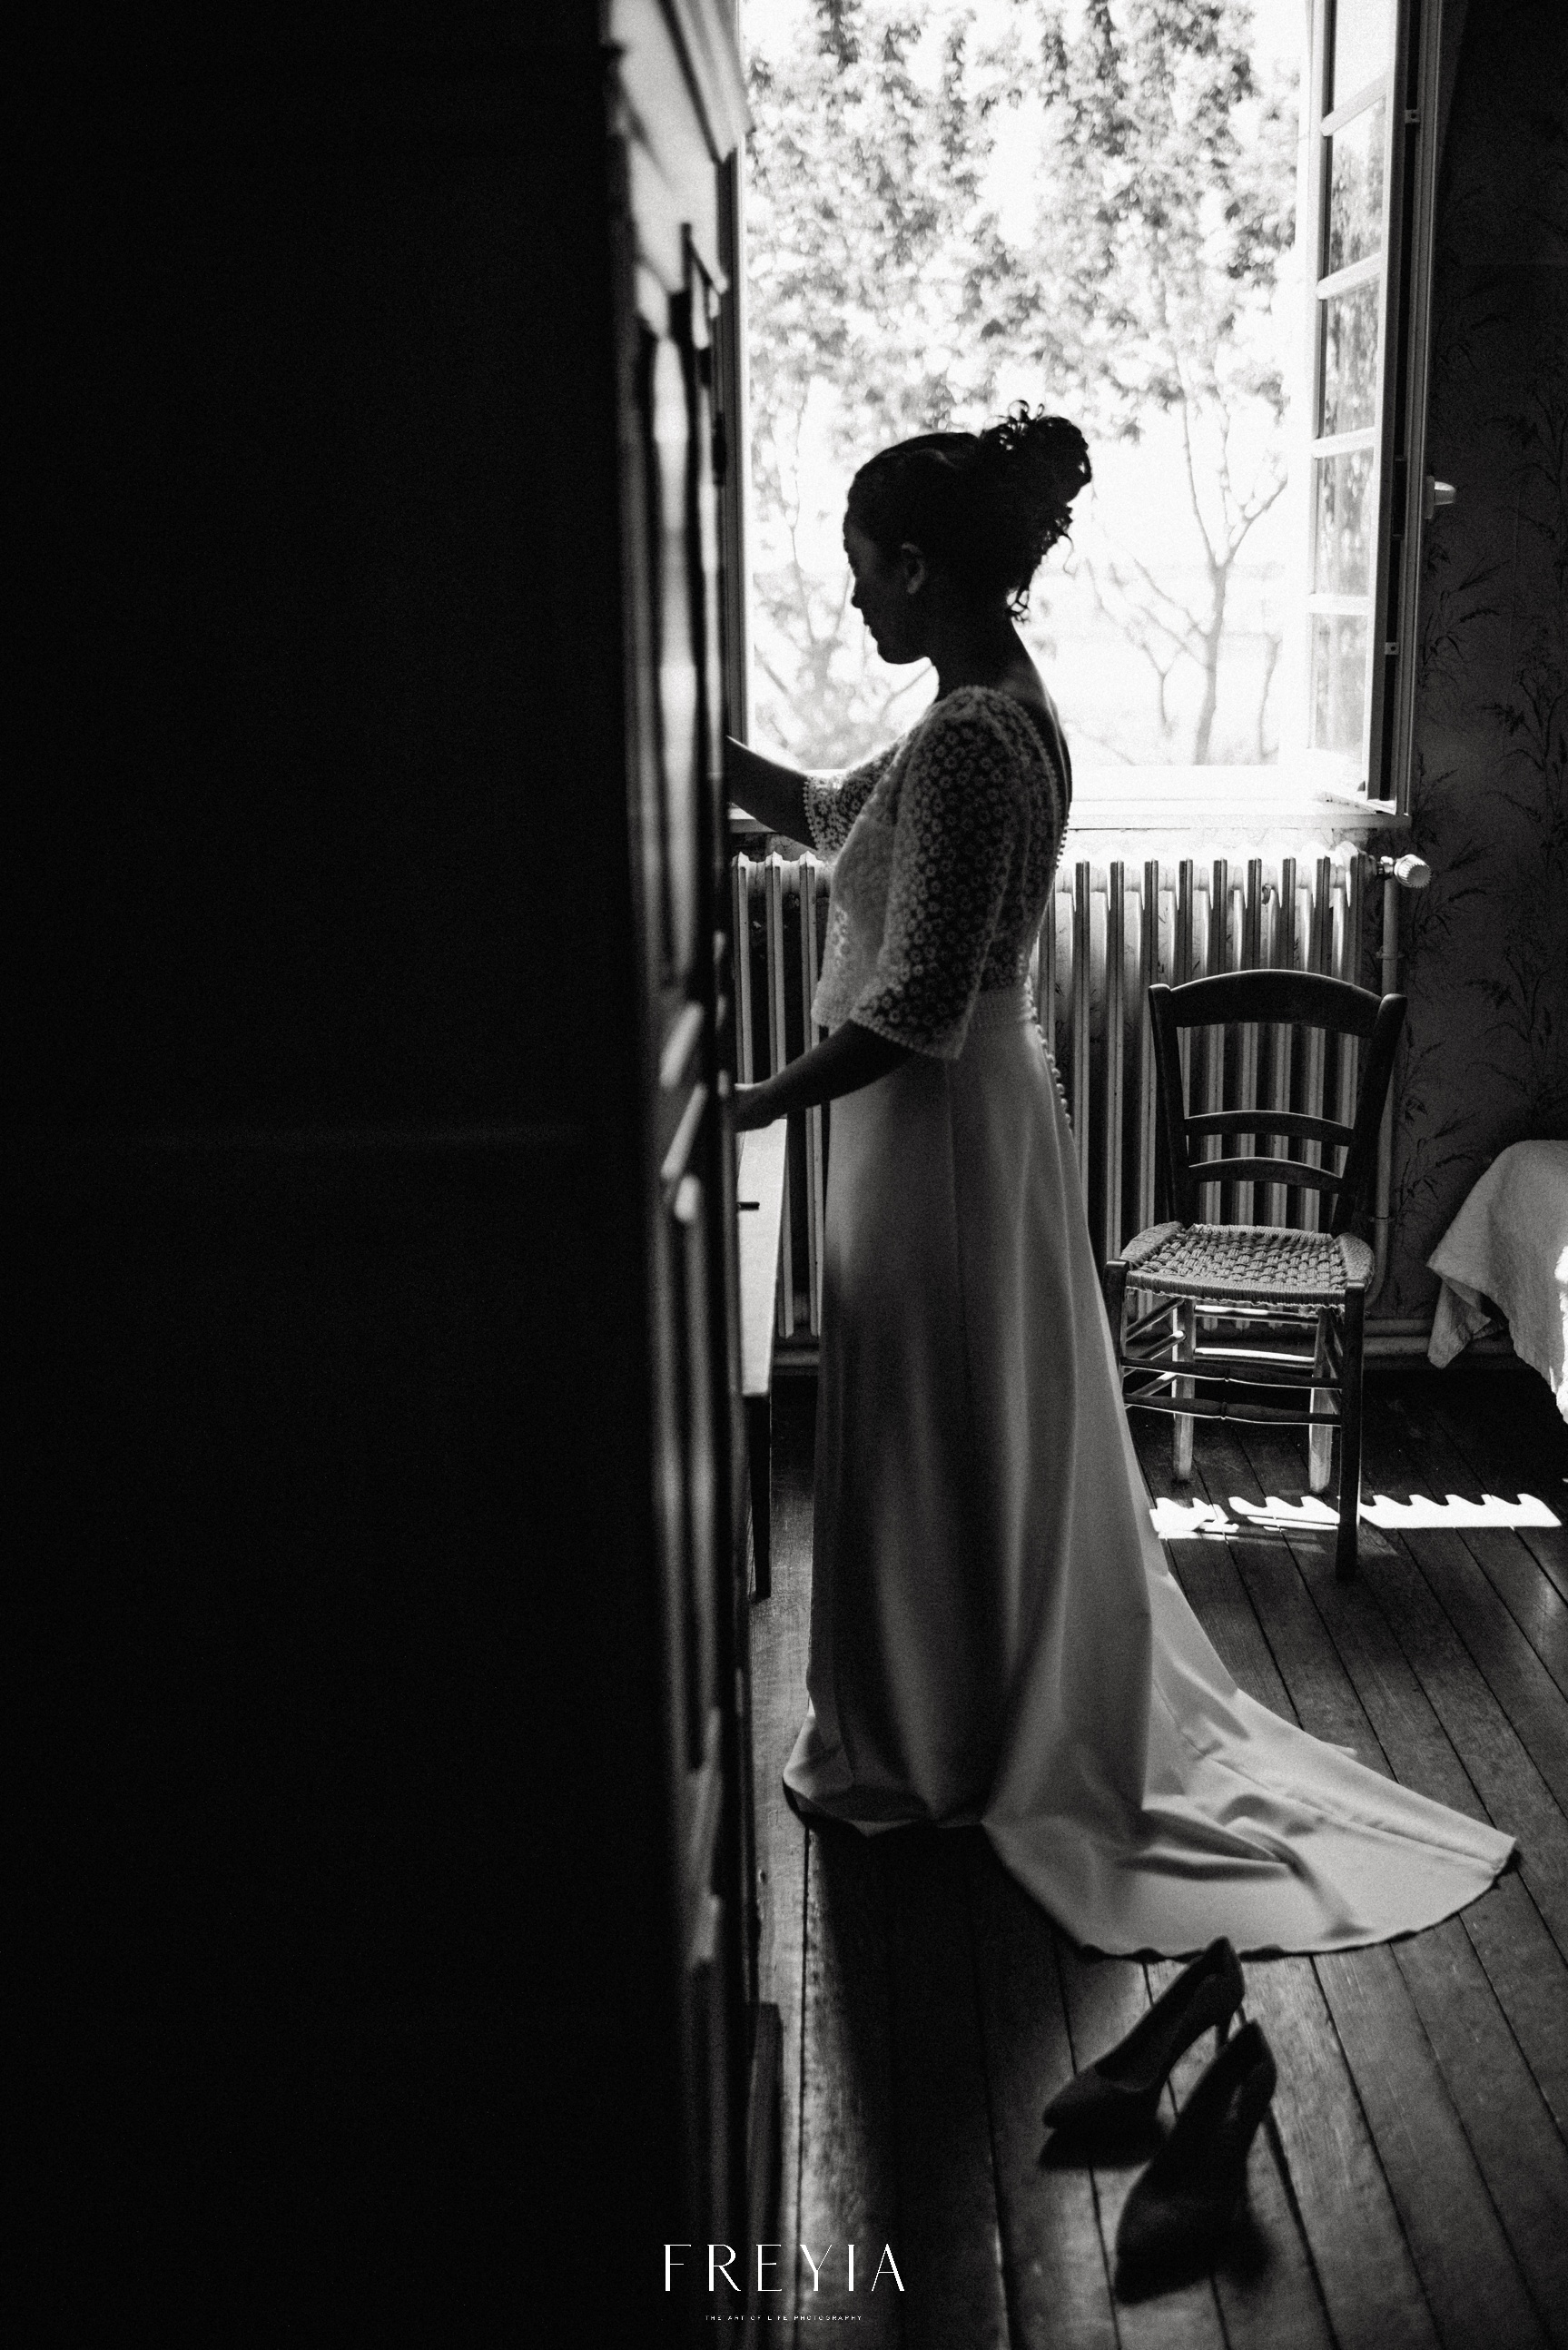 R + T |  mariage reportage alternatif moody intime minimaliste vintage naturel boho boheme |  PHOTOGRAPHE mariage PARIS france destination  | FREYIA photography_-77.jpg (Copy)